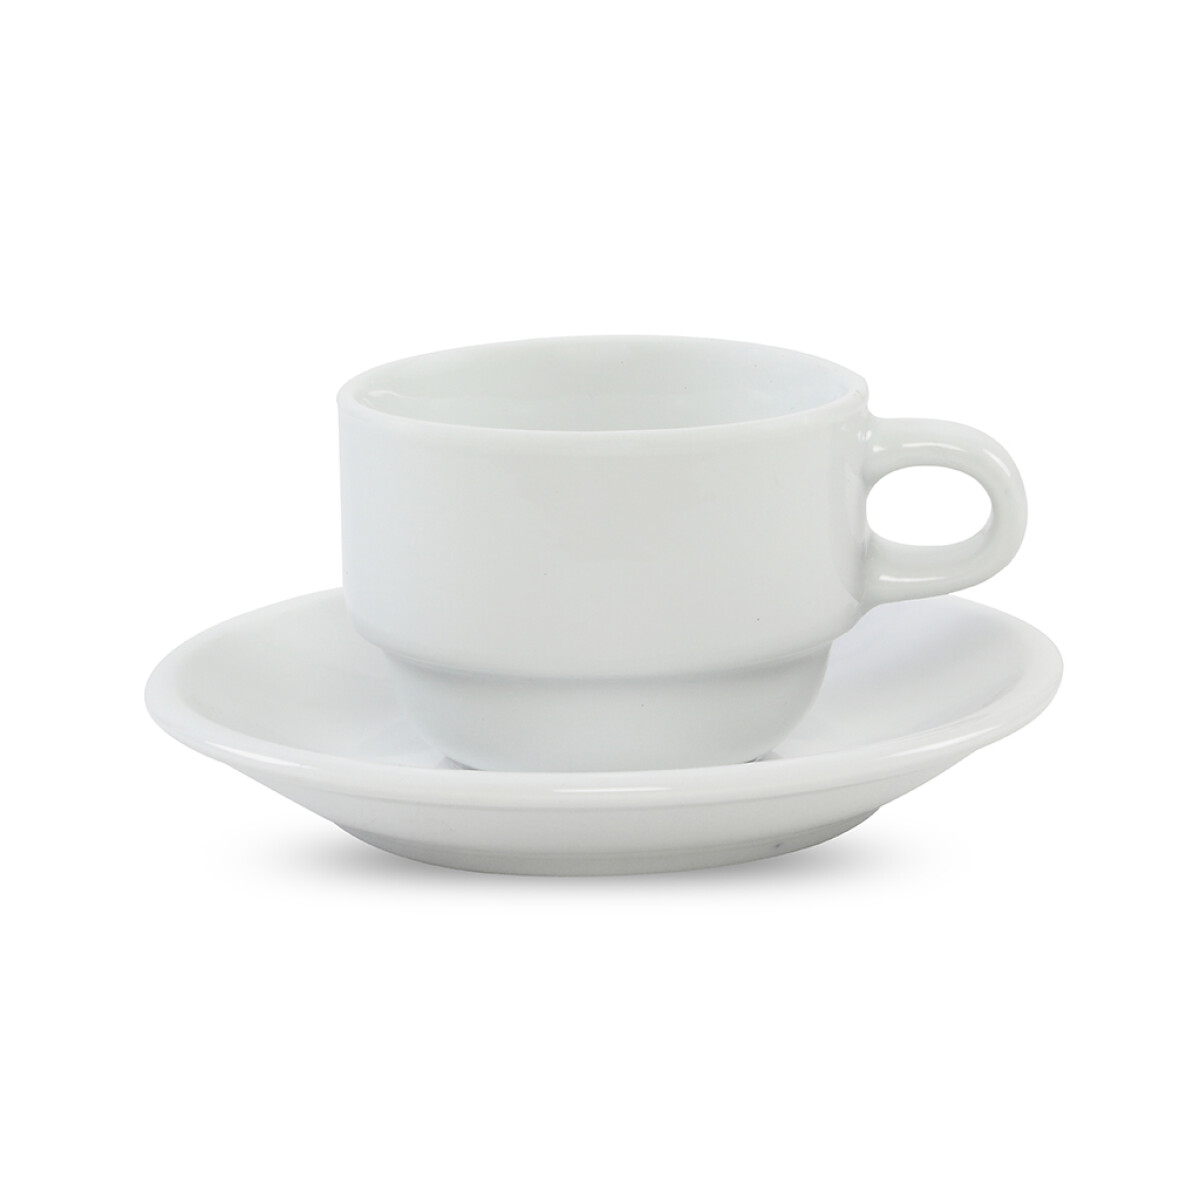 Taza Cafe con plato ceramica blanca apilable 150 ml - 000 